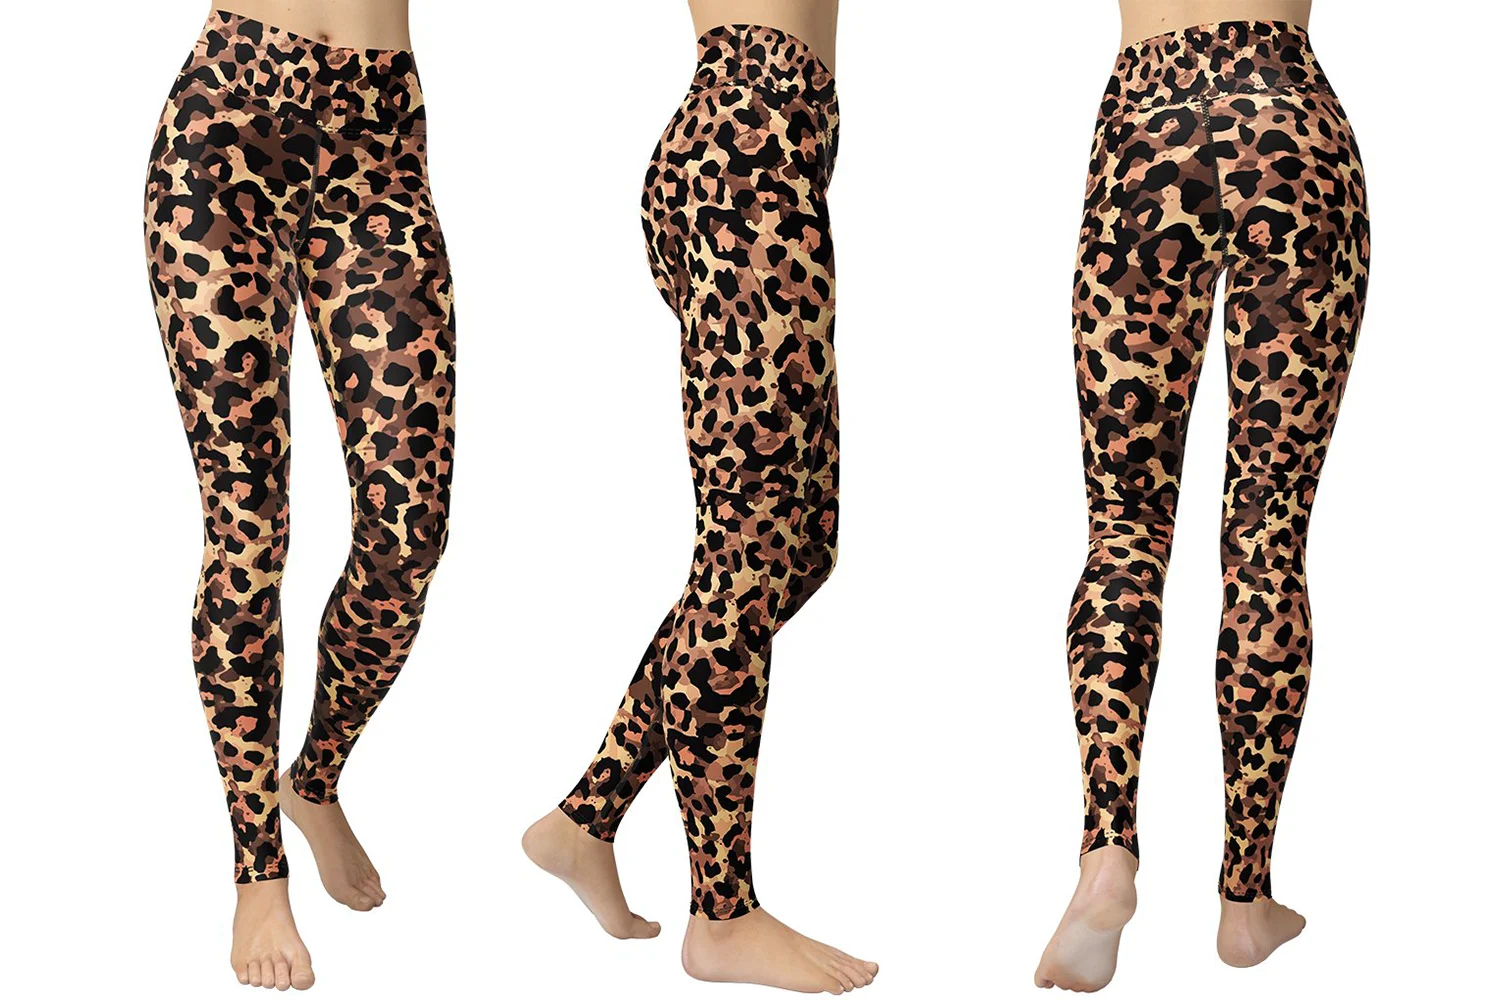 seasum leggings Gossina Women High Waist Leggings For Fitness Gym Clothing Women's Sexy Peach Hip Sports Pants Leopard Legging Animal Sportswear brown leggings